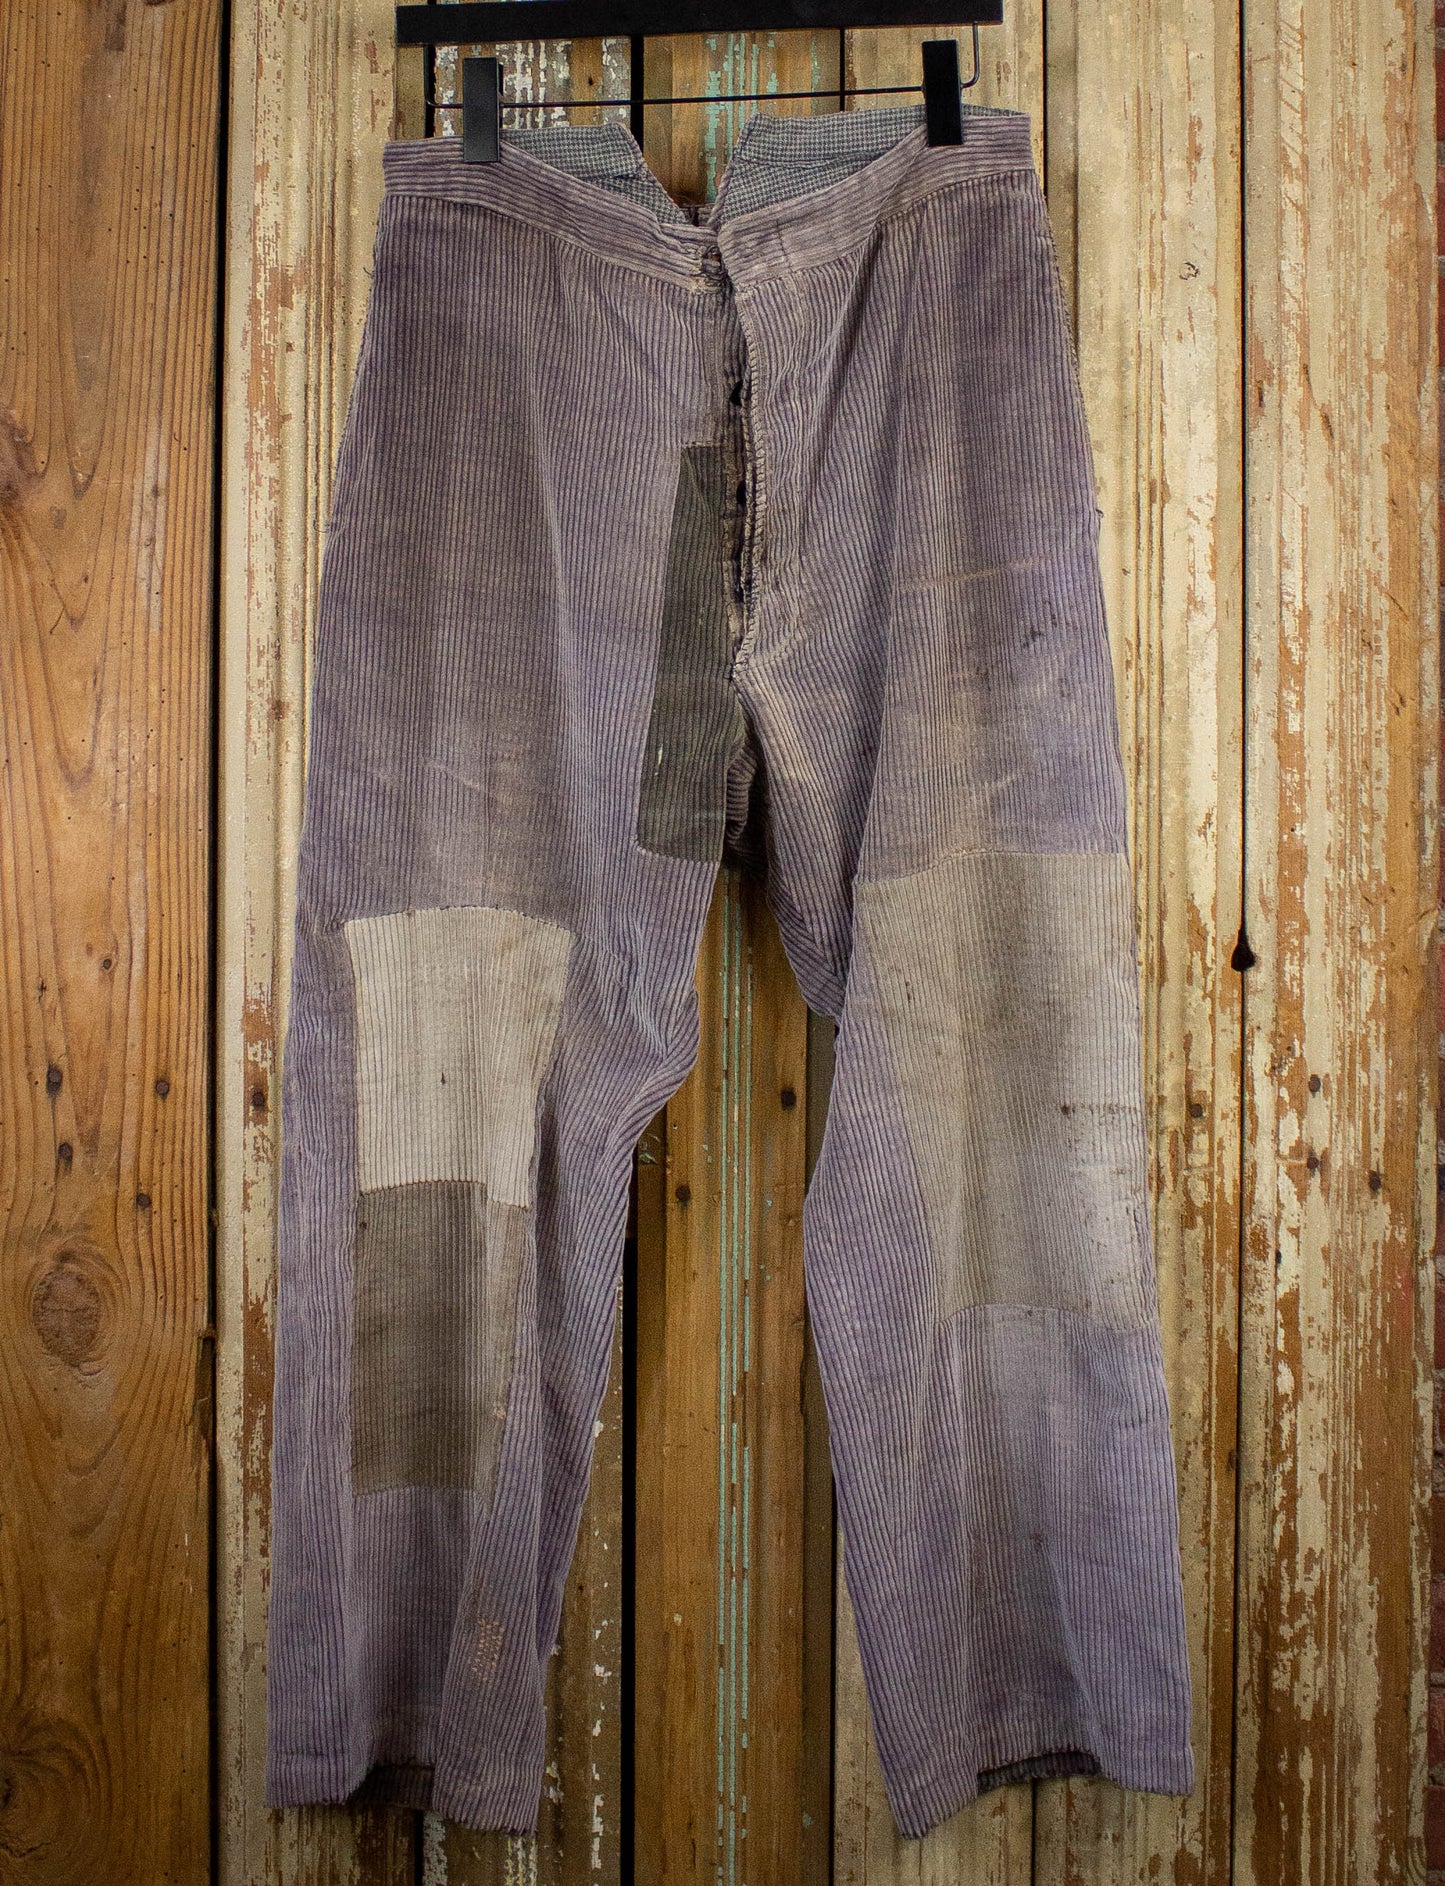 Vintage French Work Pants 30s Tan 32x26